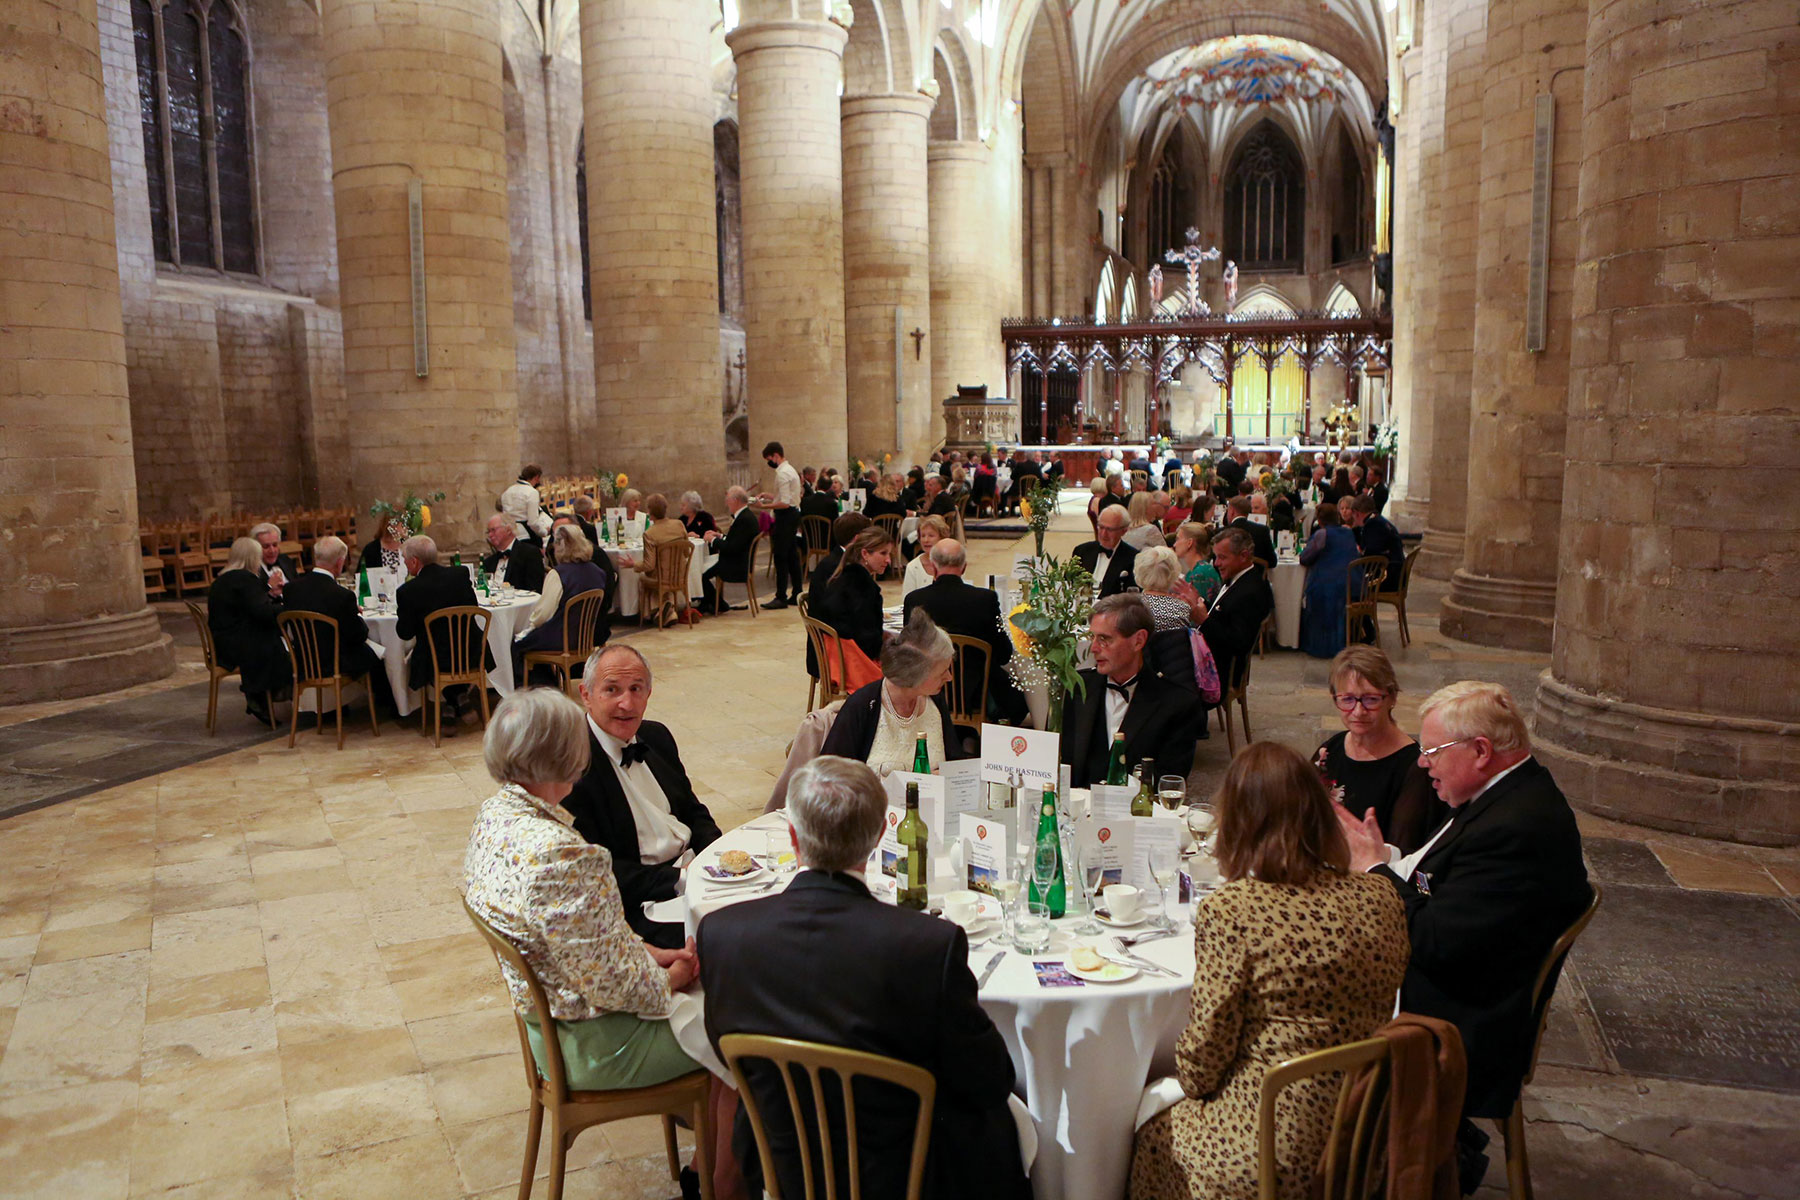 Annual Dinner at Tewkesbury Abbey